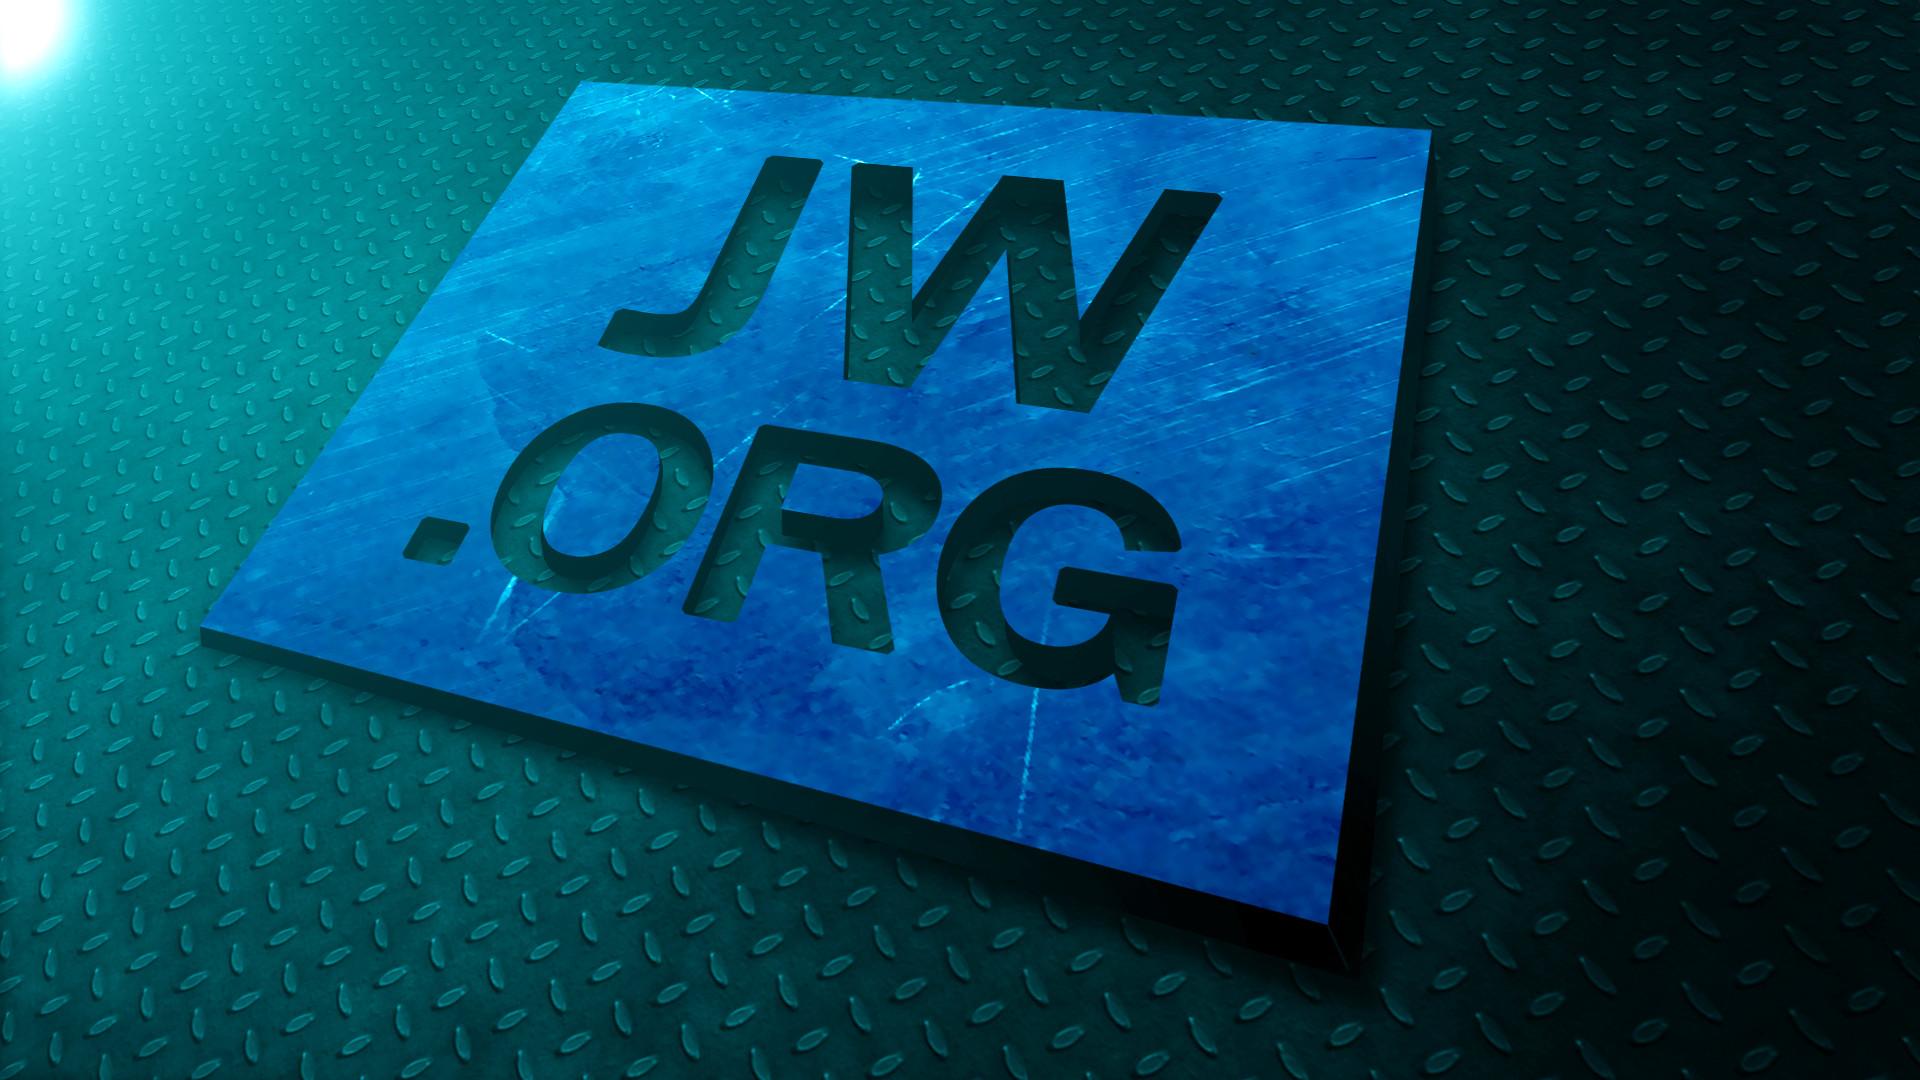 Jw Org Wallpaper Desktop